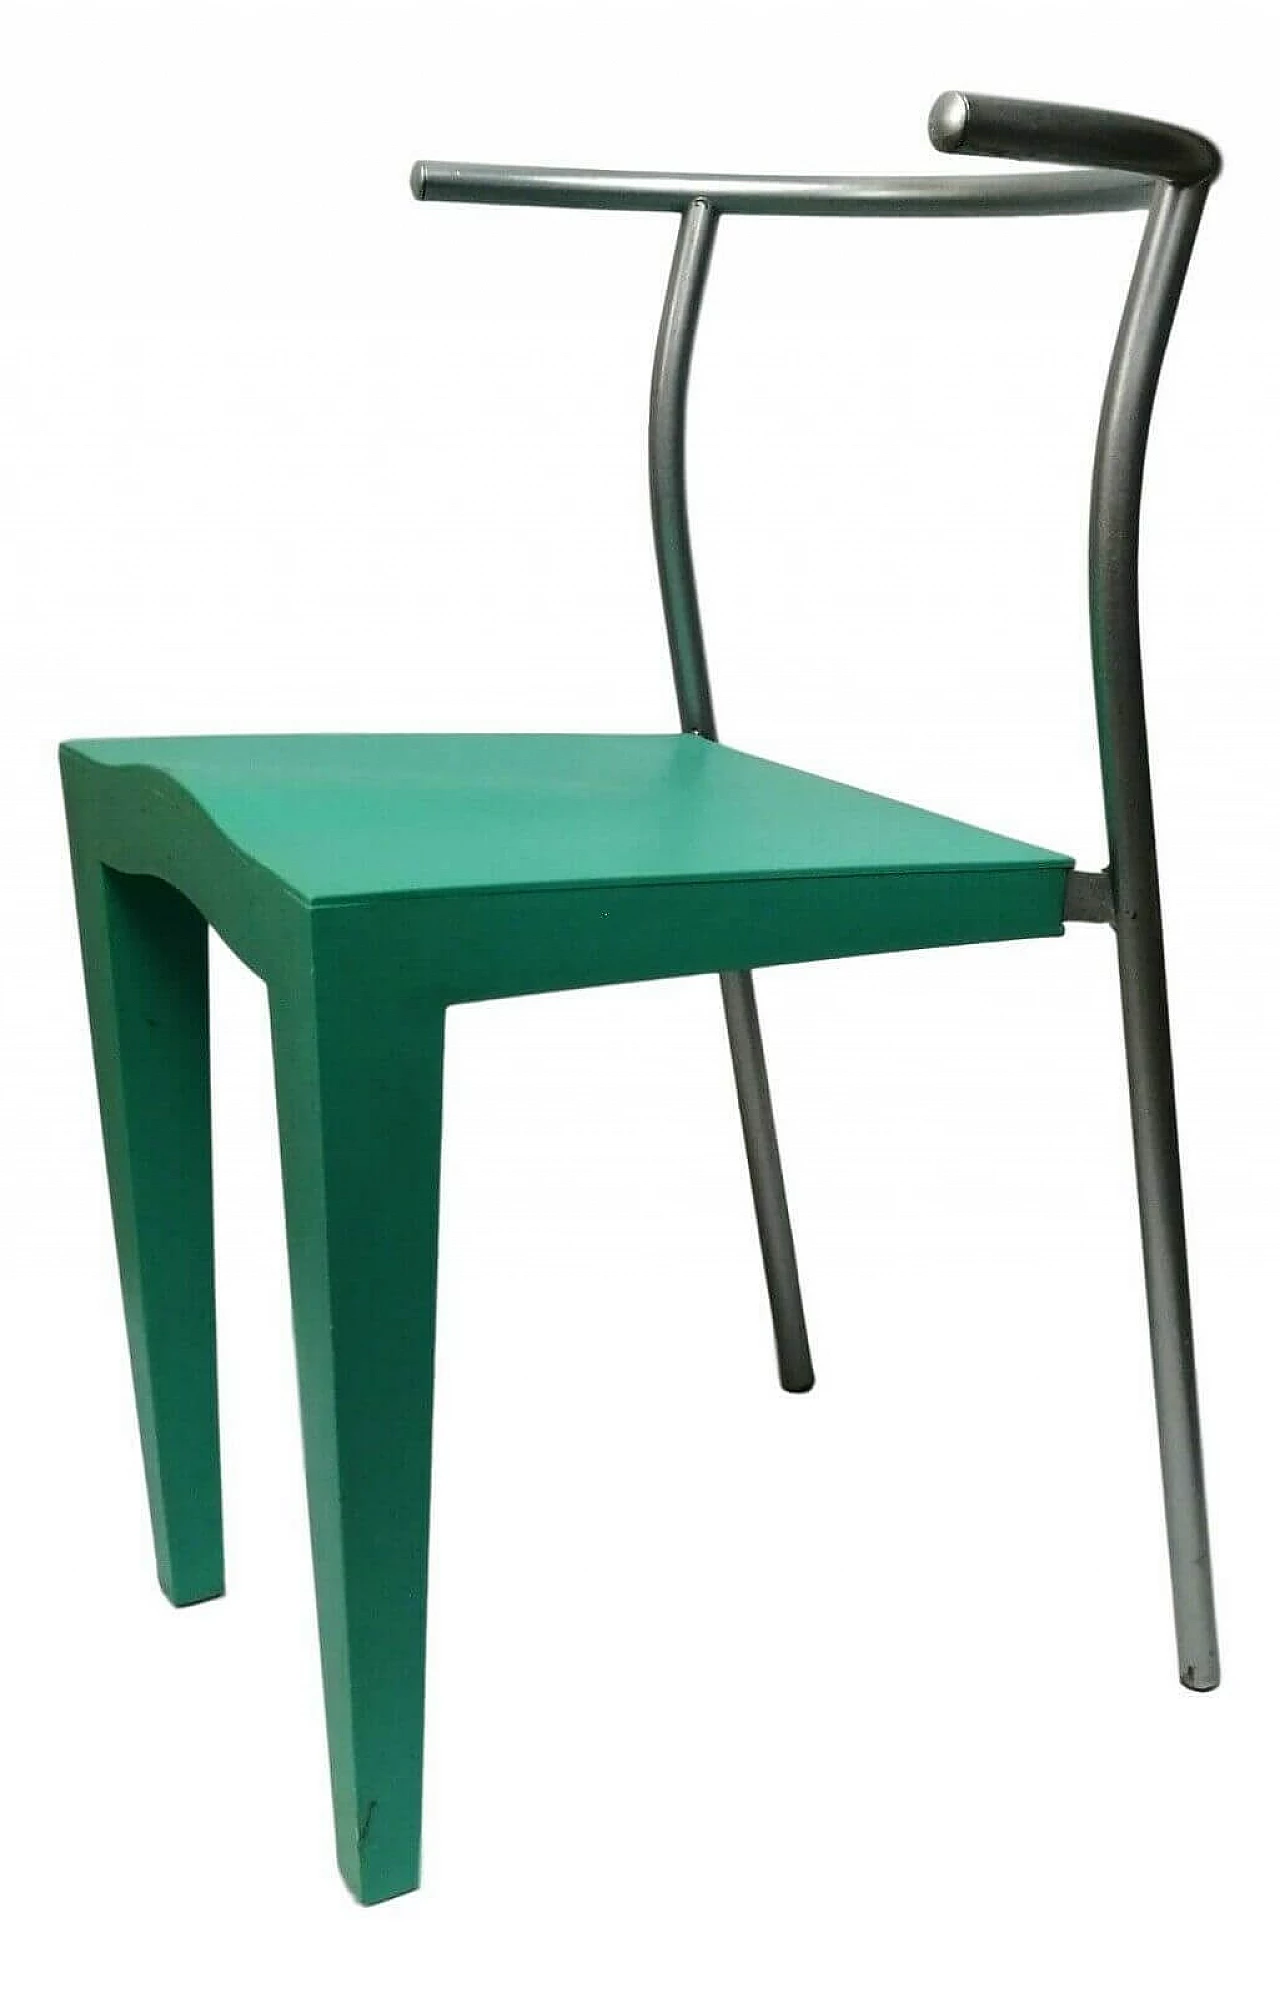 Sedia Dr Glob di Philippe Starck per Kartell, verde, anni '90 1164734